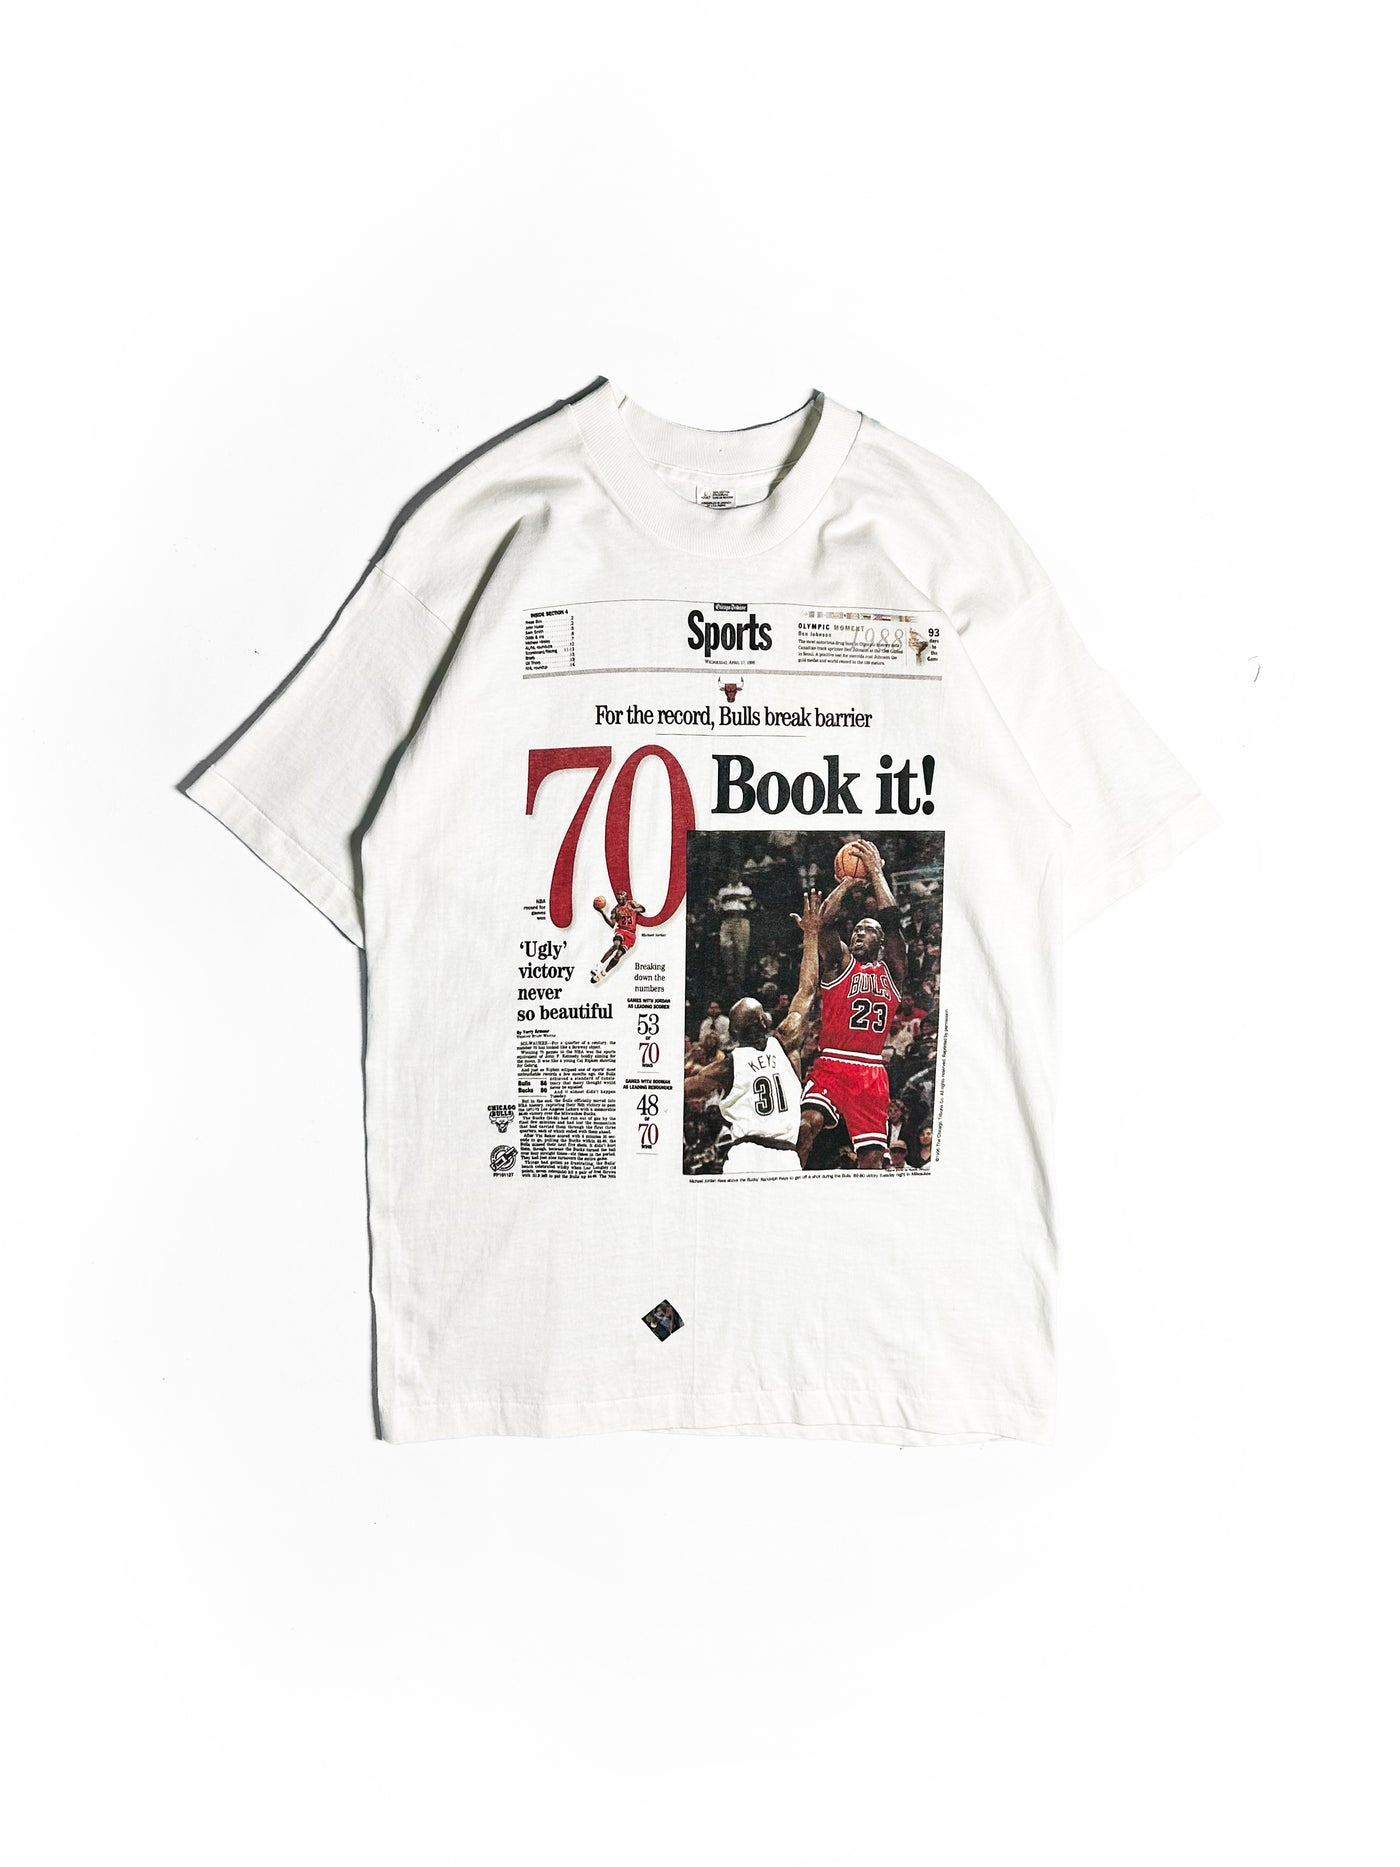 Vintage 1996 Chicago Bulls 70 Wins ‘Book It’ T-Shirt